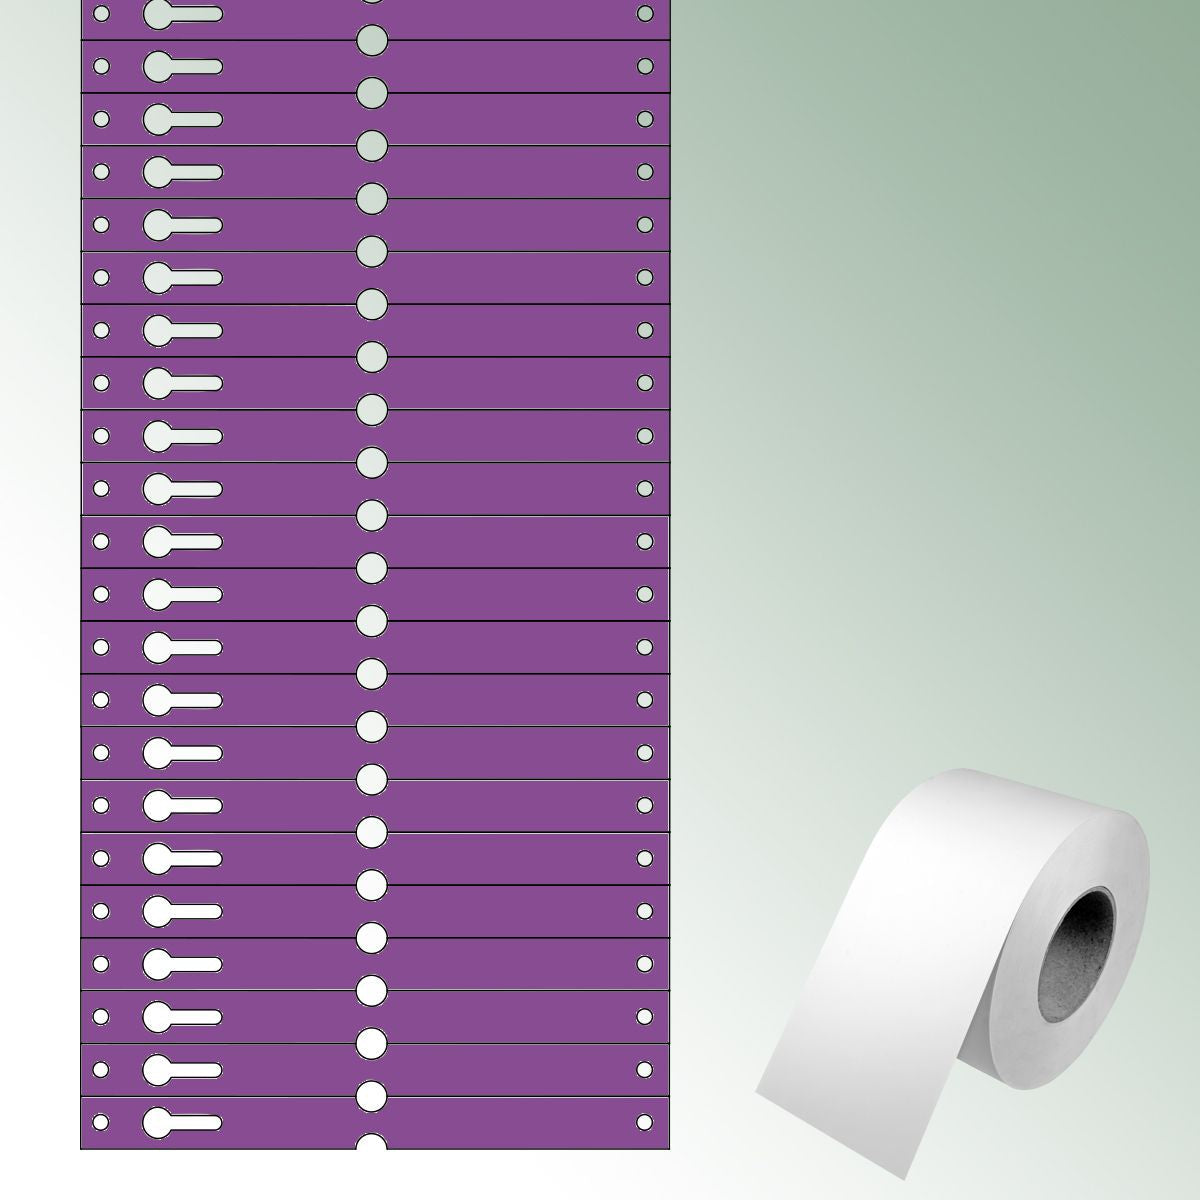 Loop Labels 140x12,75mm violet, unprinted No./roll = 1000 pieces